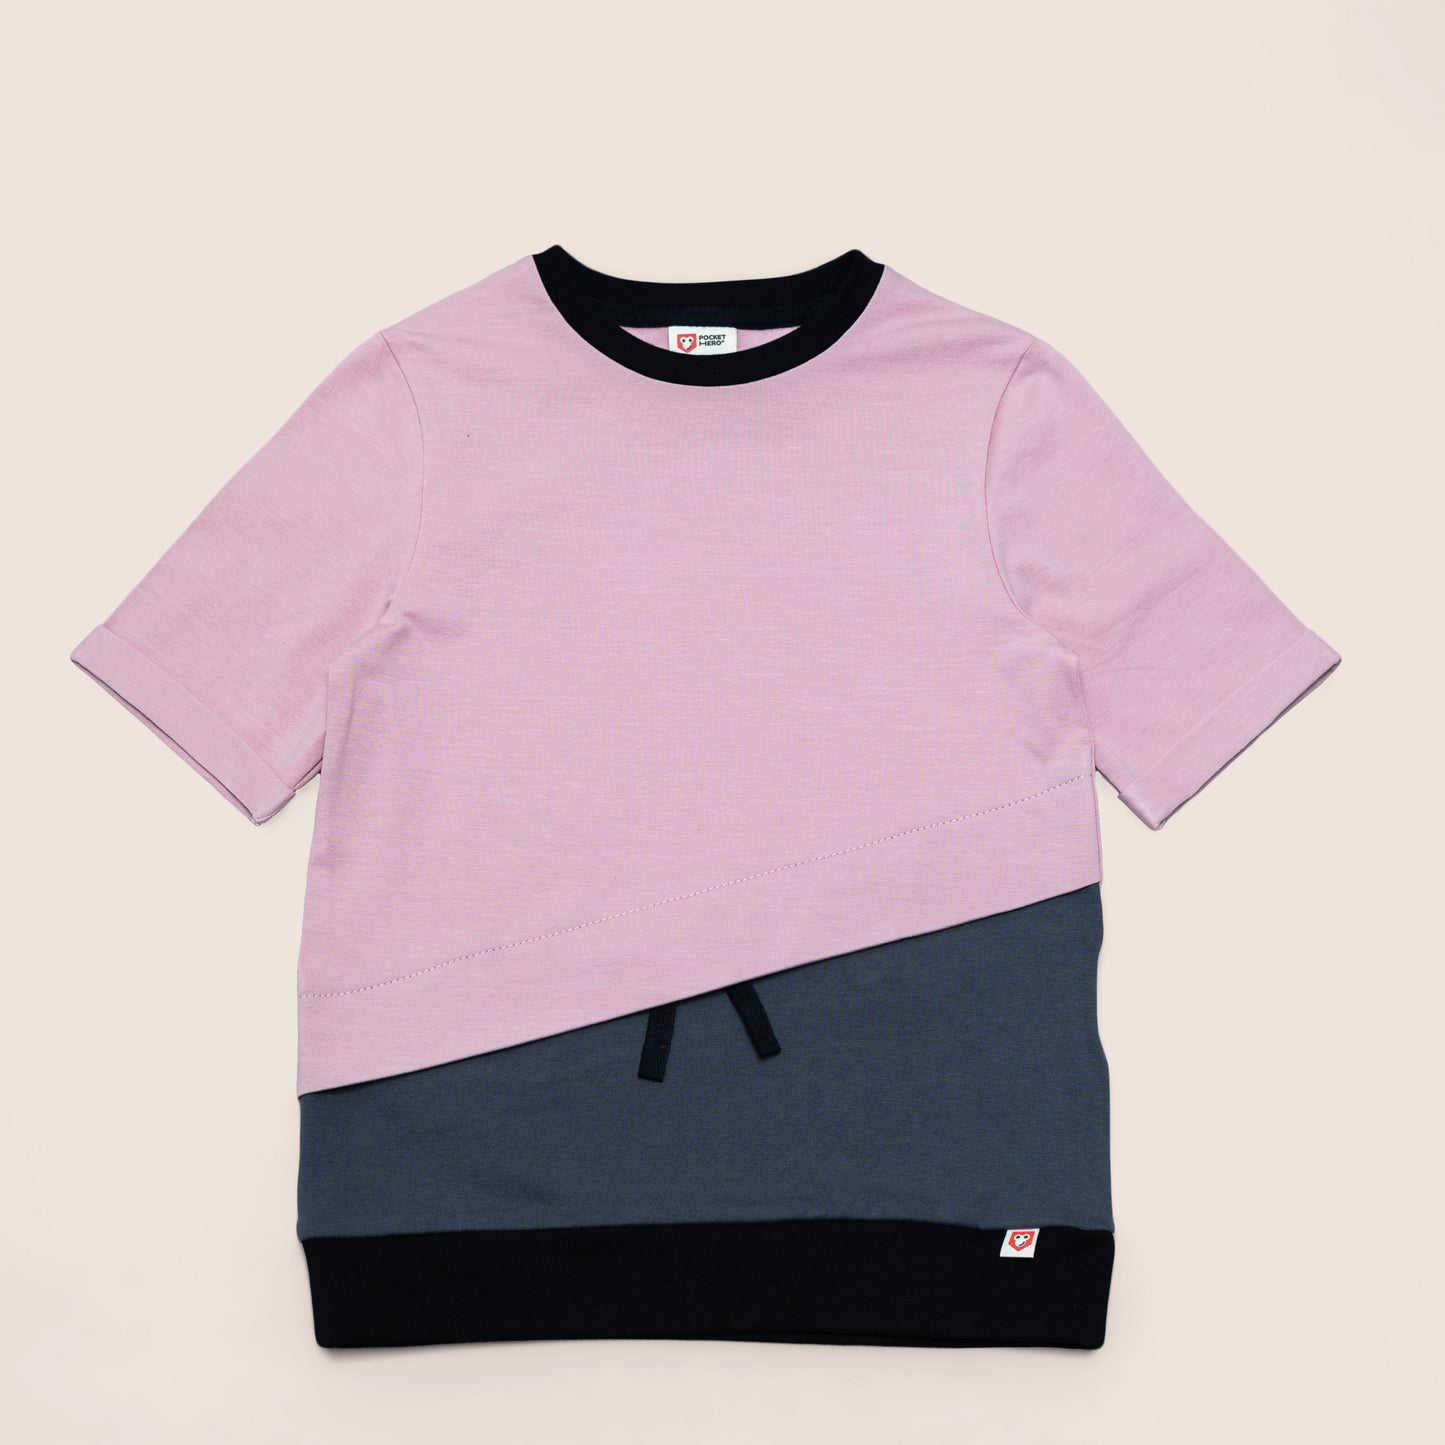 Type 1 Diabetes Clothing - Short Sleeve T-shirt Ballet Pink | Our Pocket Hero